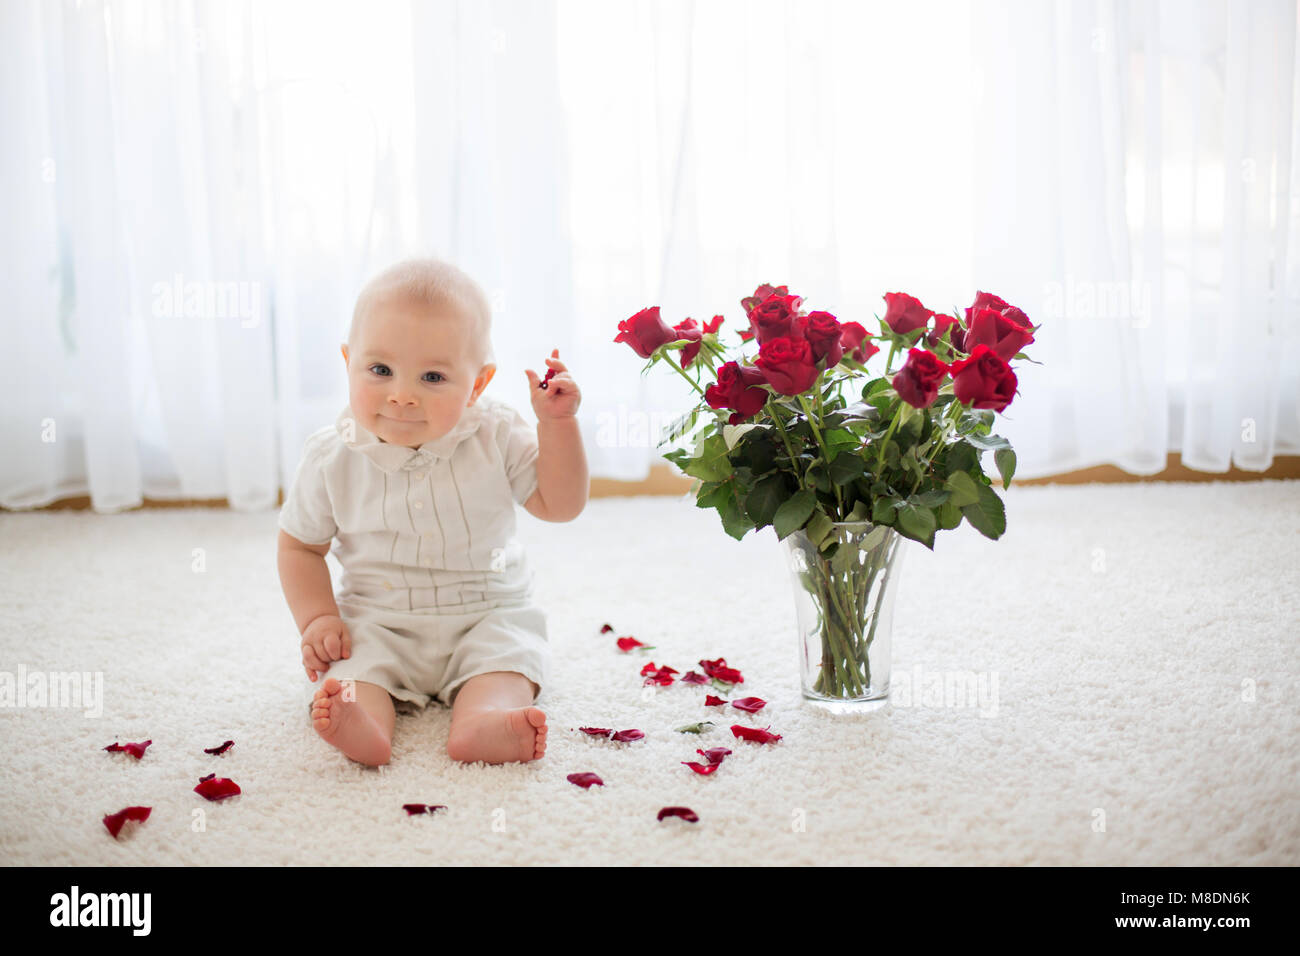 cute babies in red roses